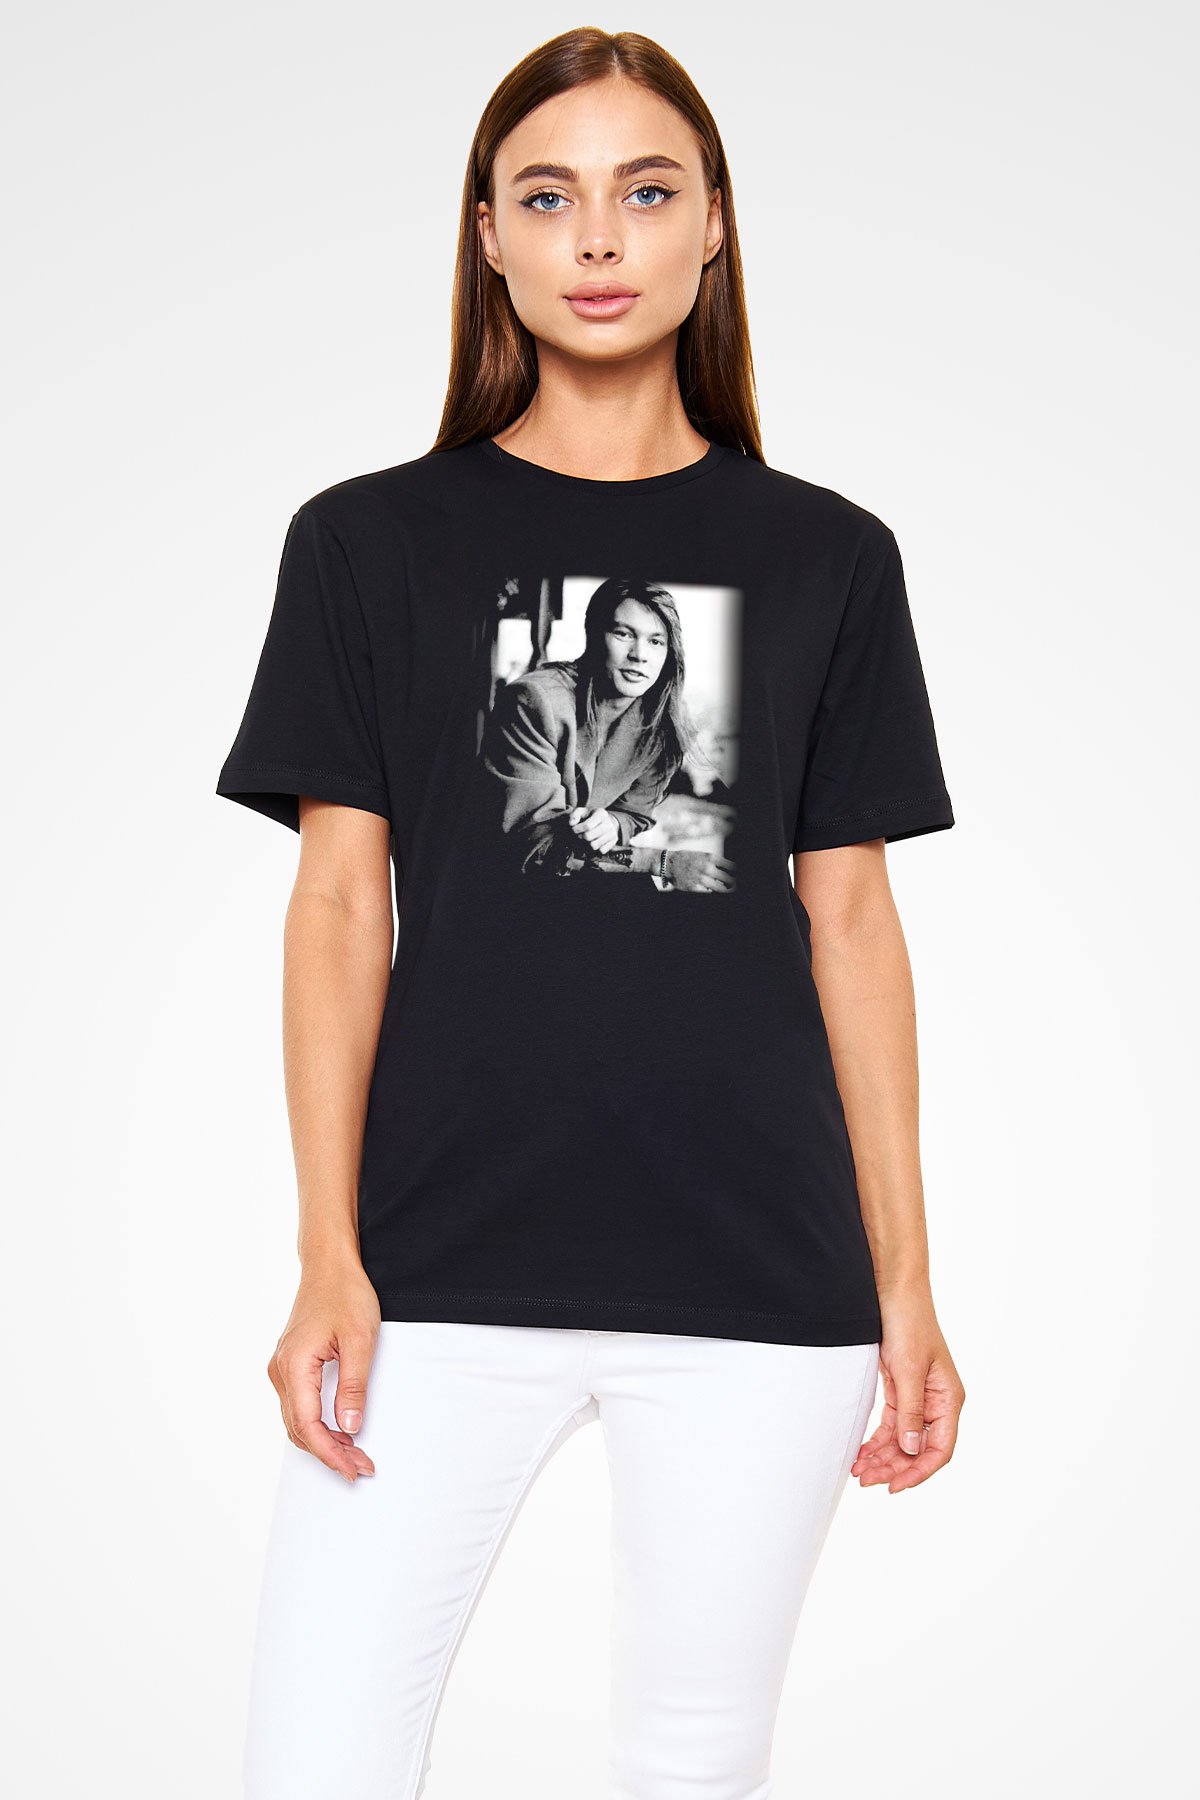 Axl Rose Black Unisex T-Shirt - Tees - Shirts